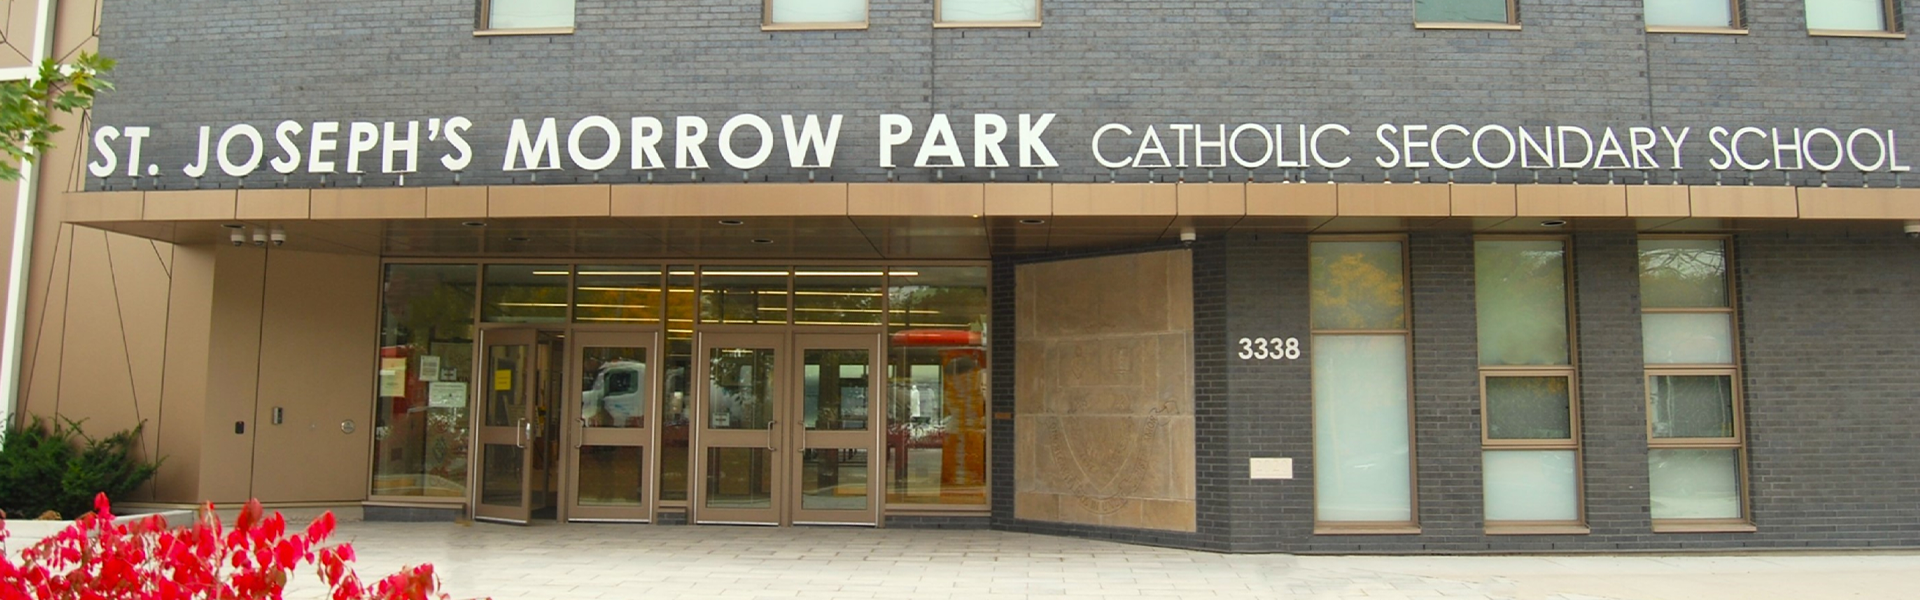 The front entrance of St. Joseph's Morrow Park Catholic Secondary School.